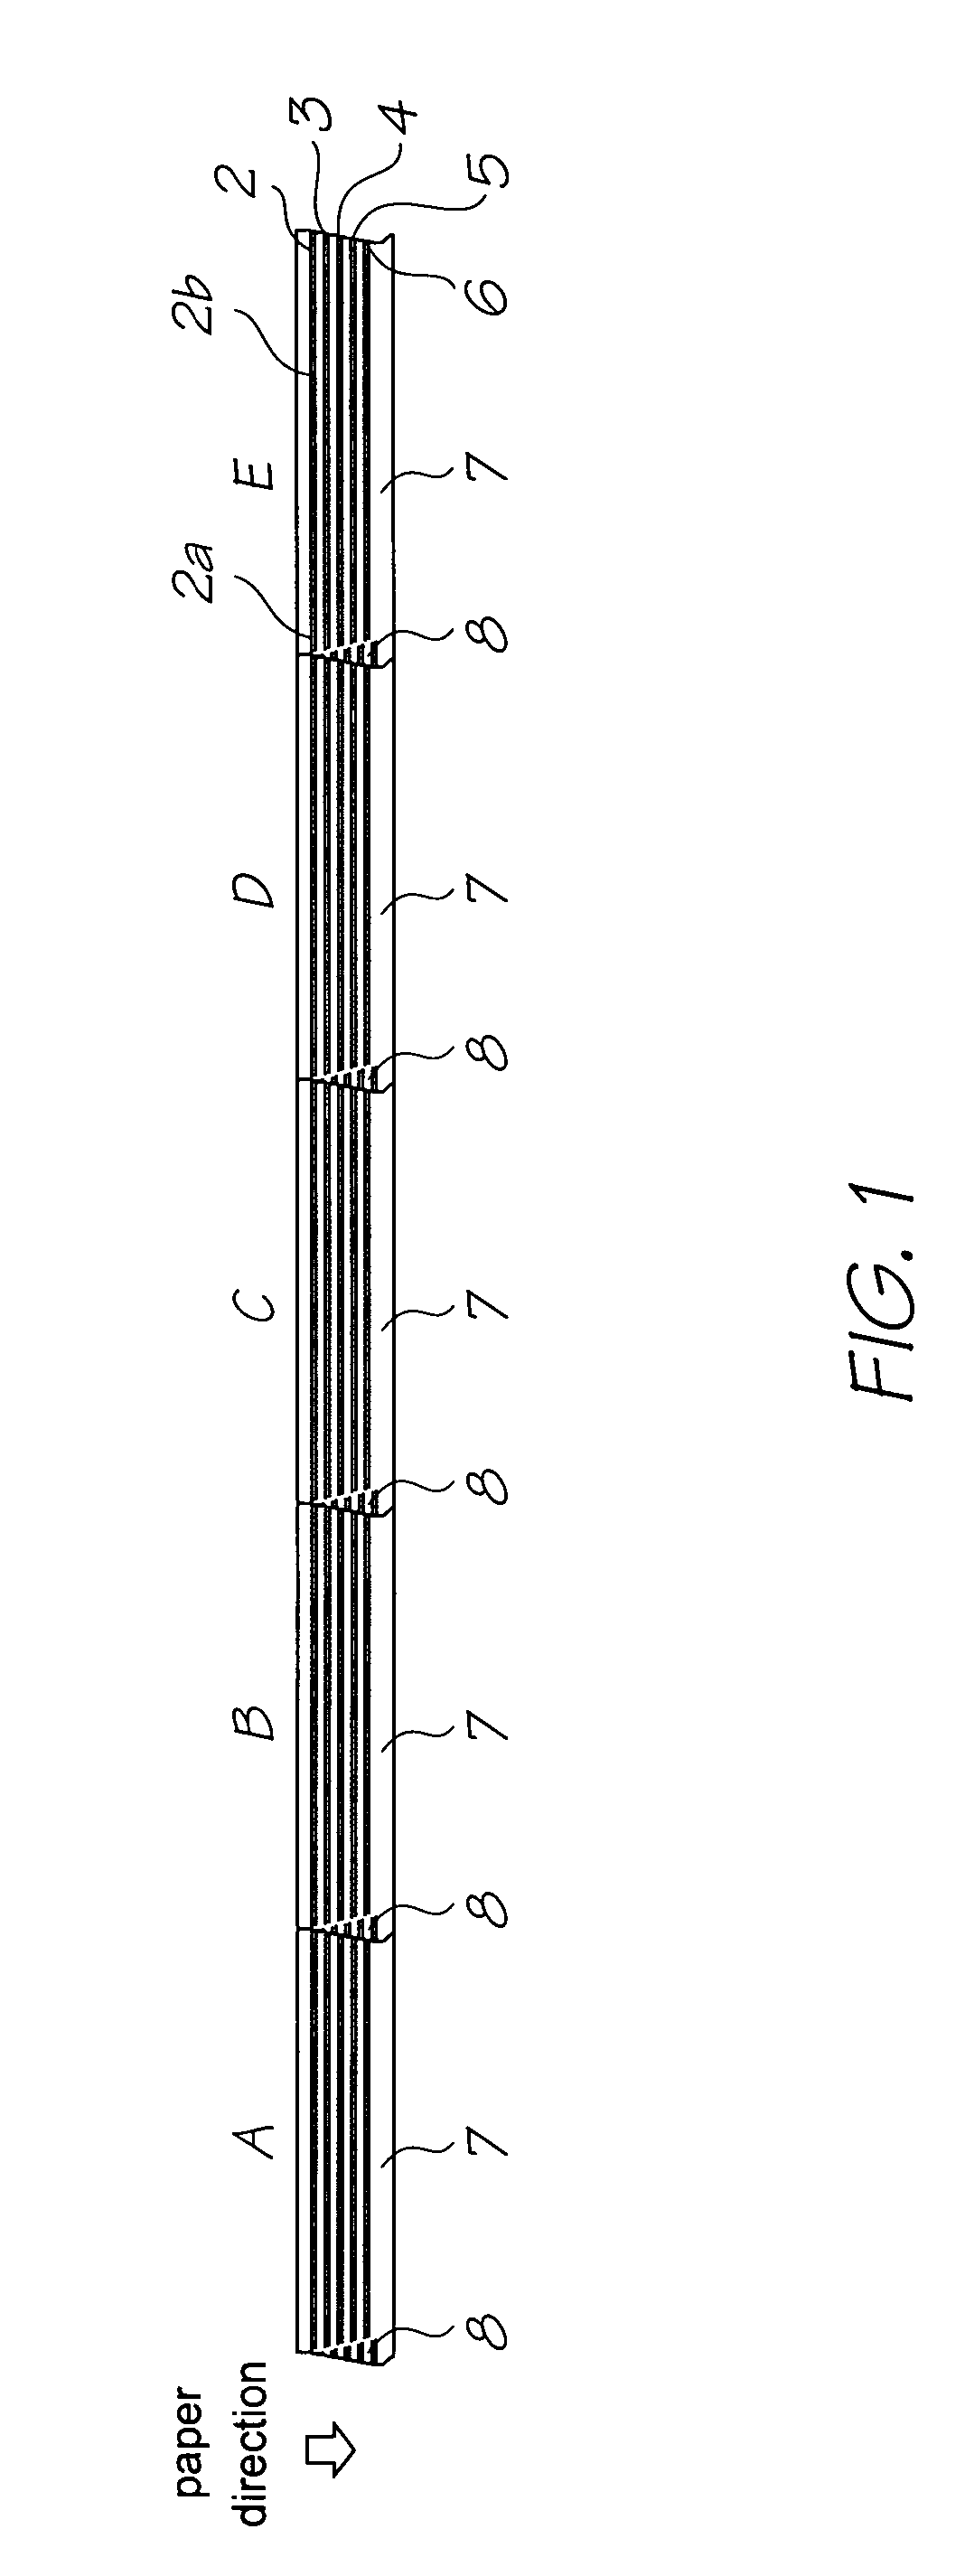 Method of modulating printhead peak power requirement using redundant nozzles